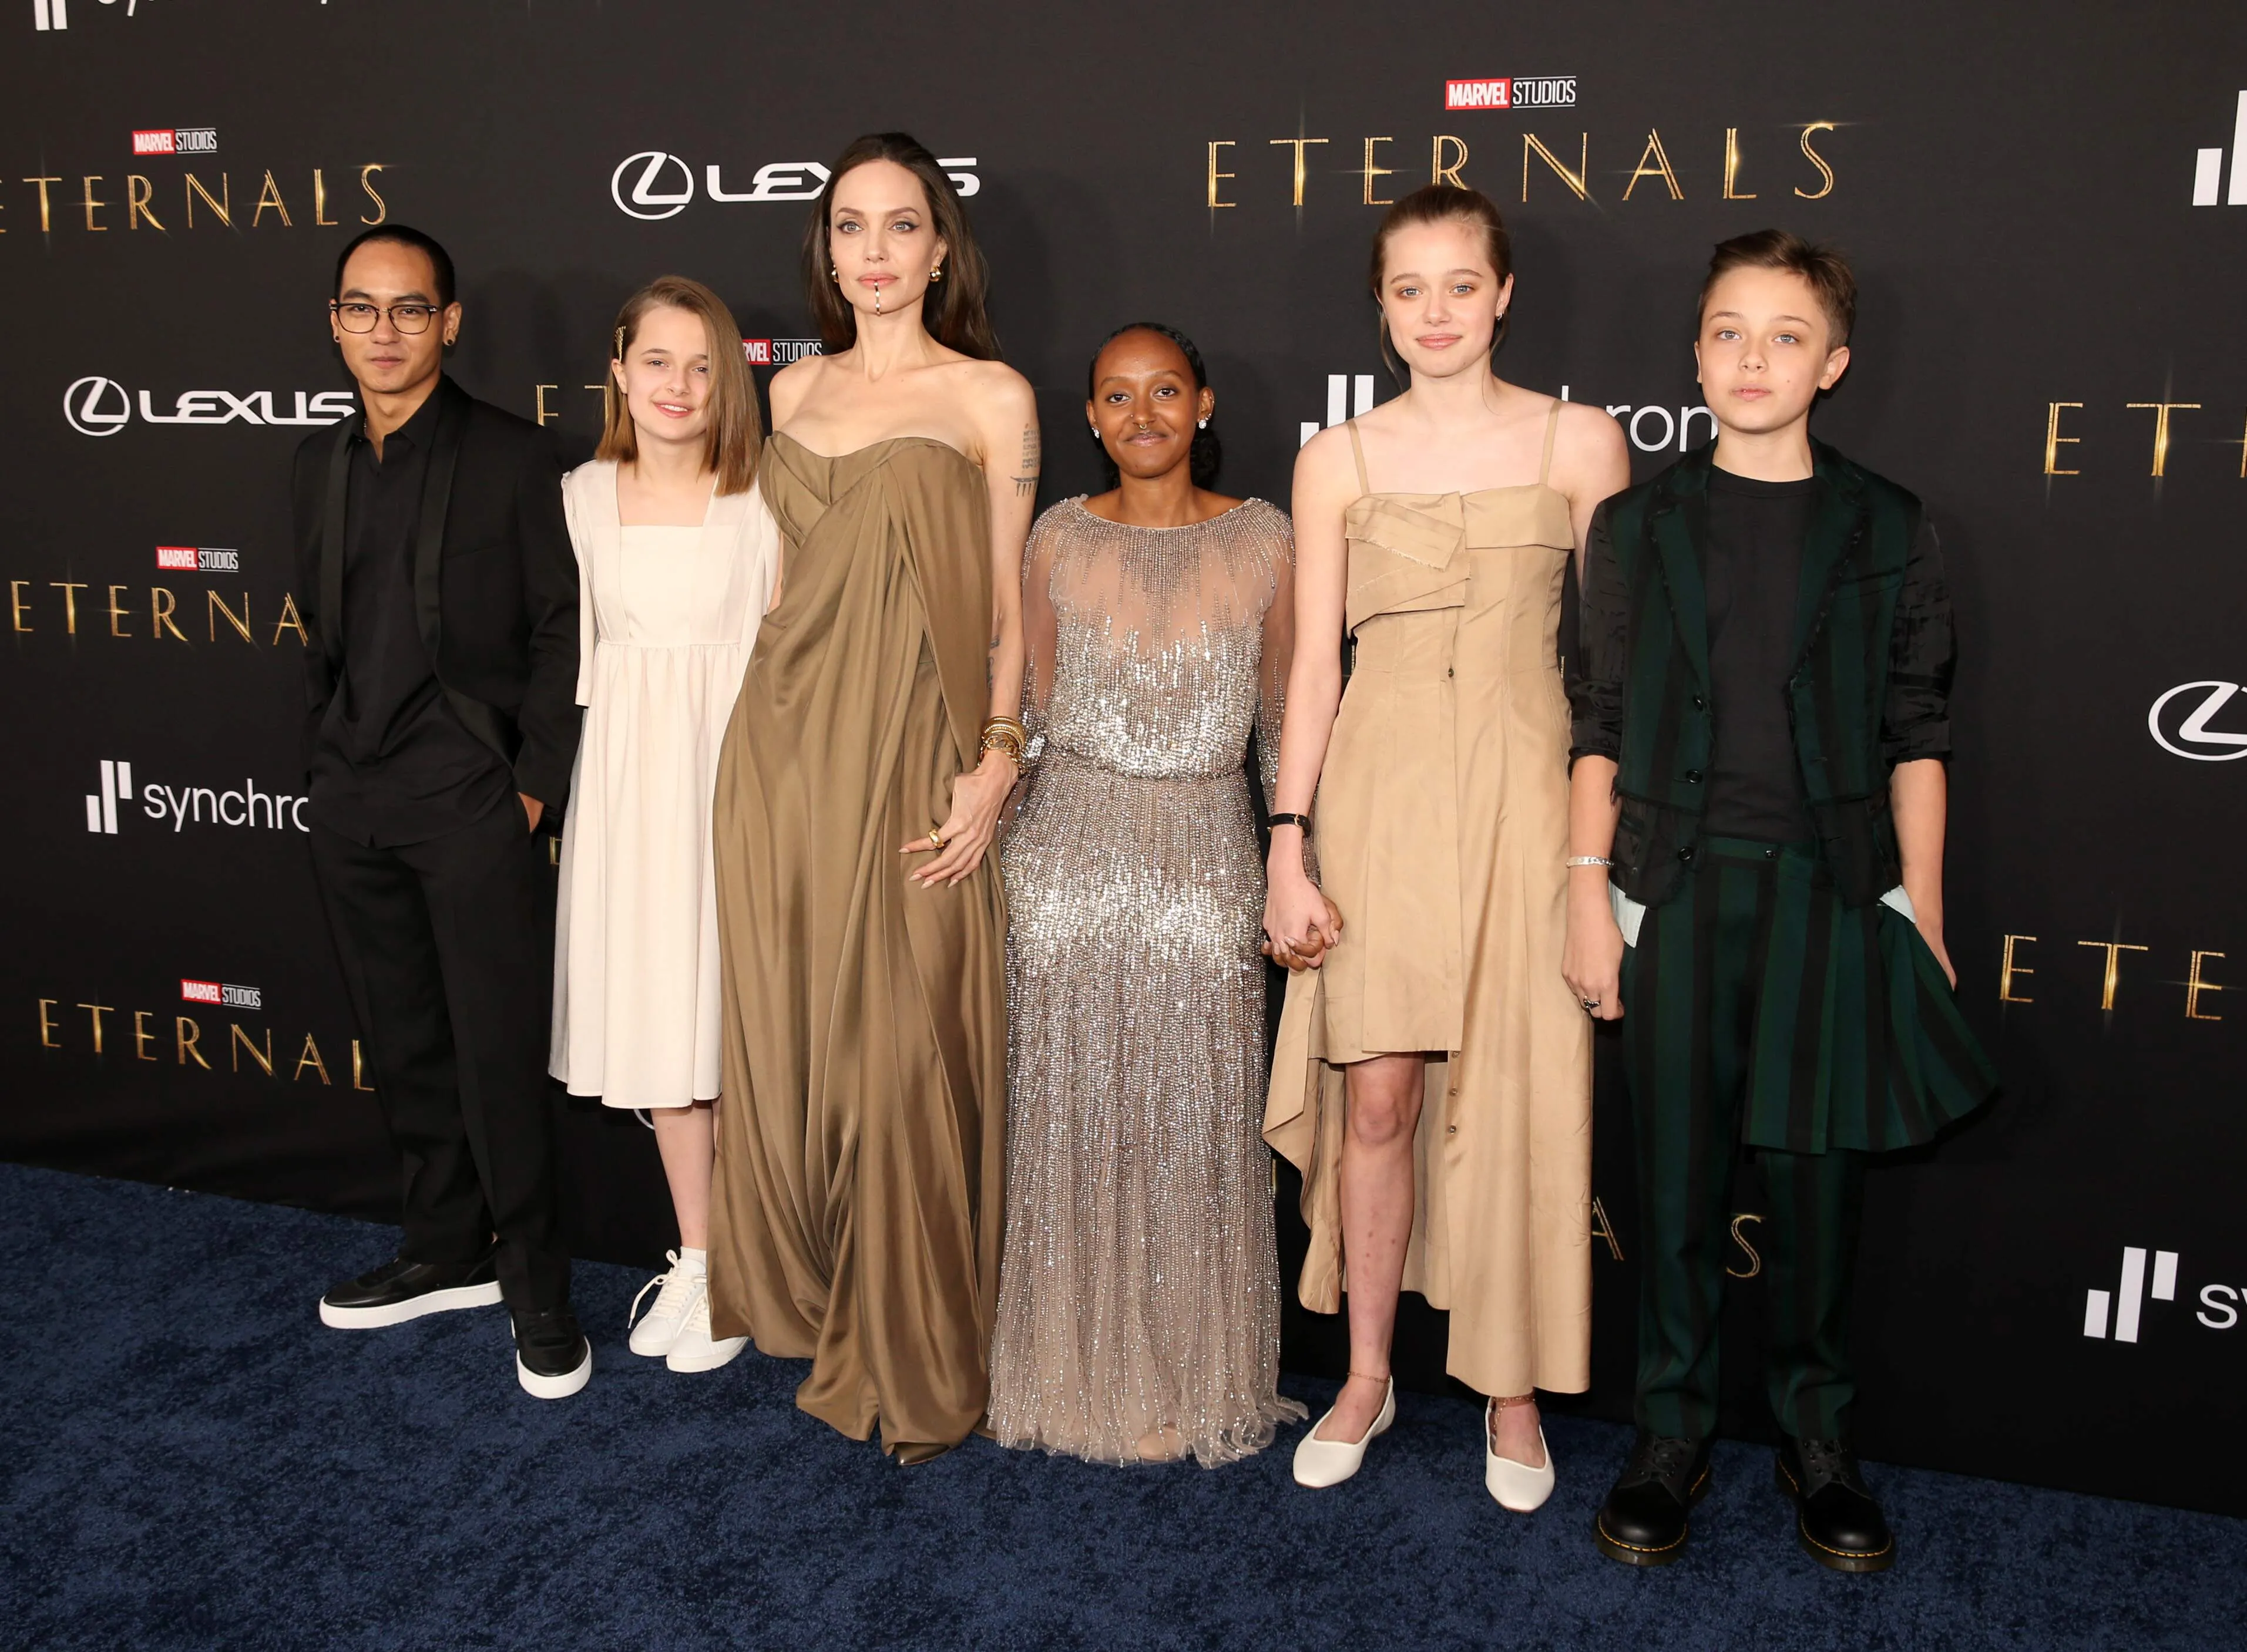 The Jolie-Pitt family, sans Brad Pitt, attend the Eternals premiere in 2021